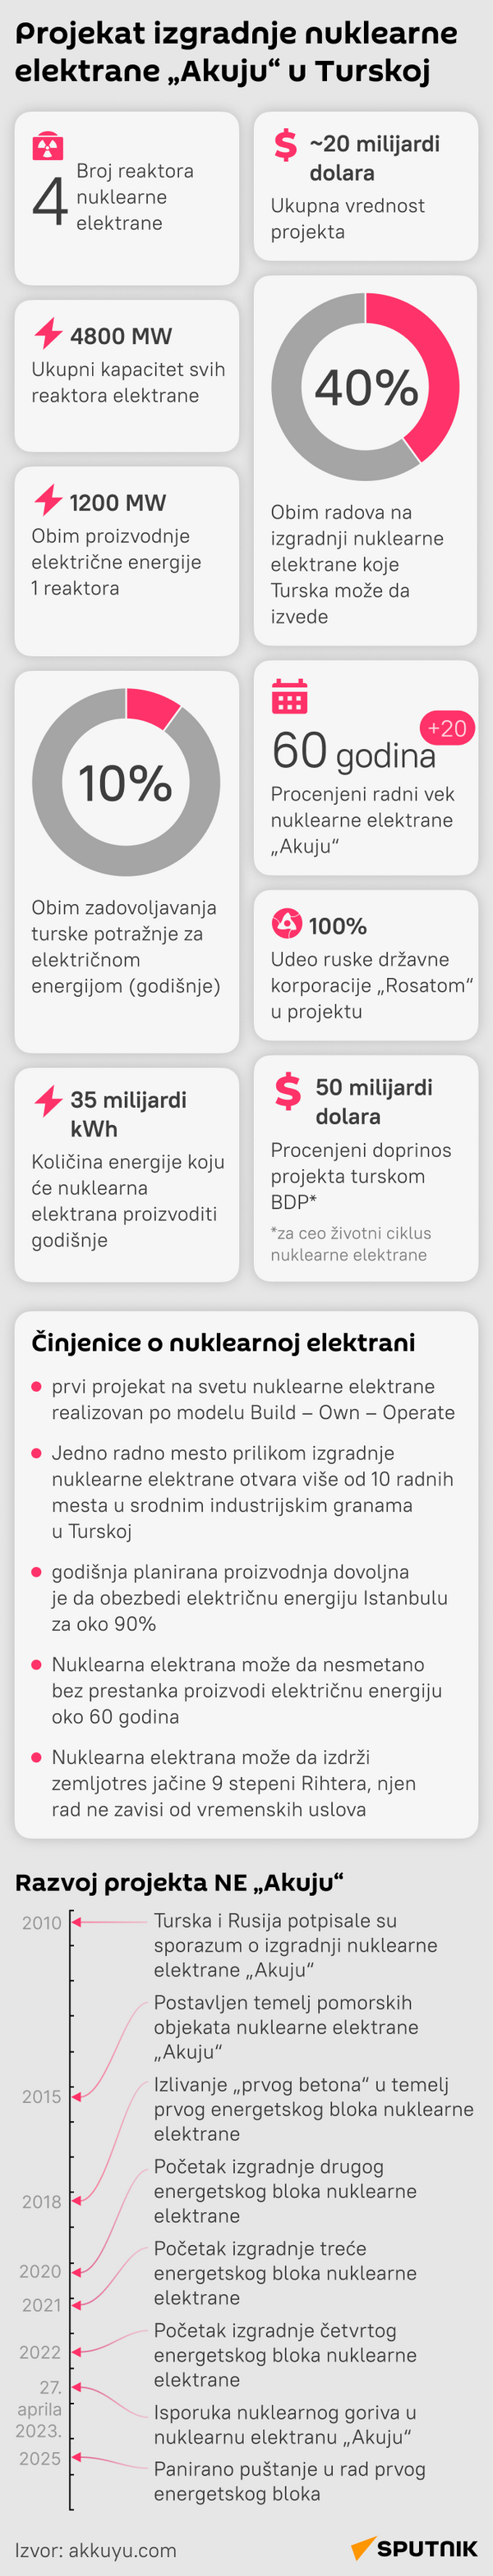 Infografika Projekat izgradnje nuklearne elektrane „Akuju“ u Turskoj Latinica mob - Sputnik Srbija